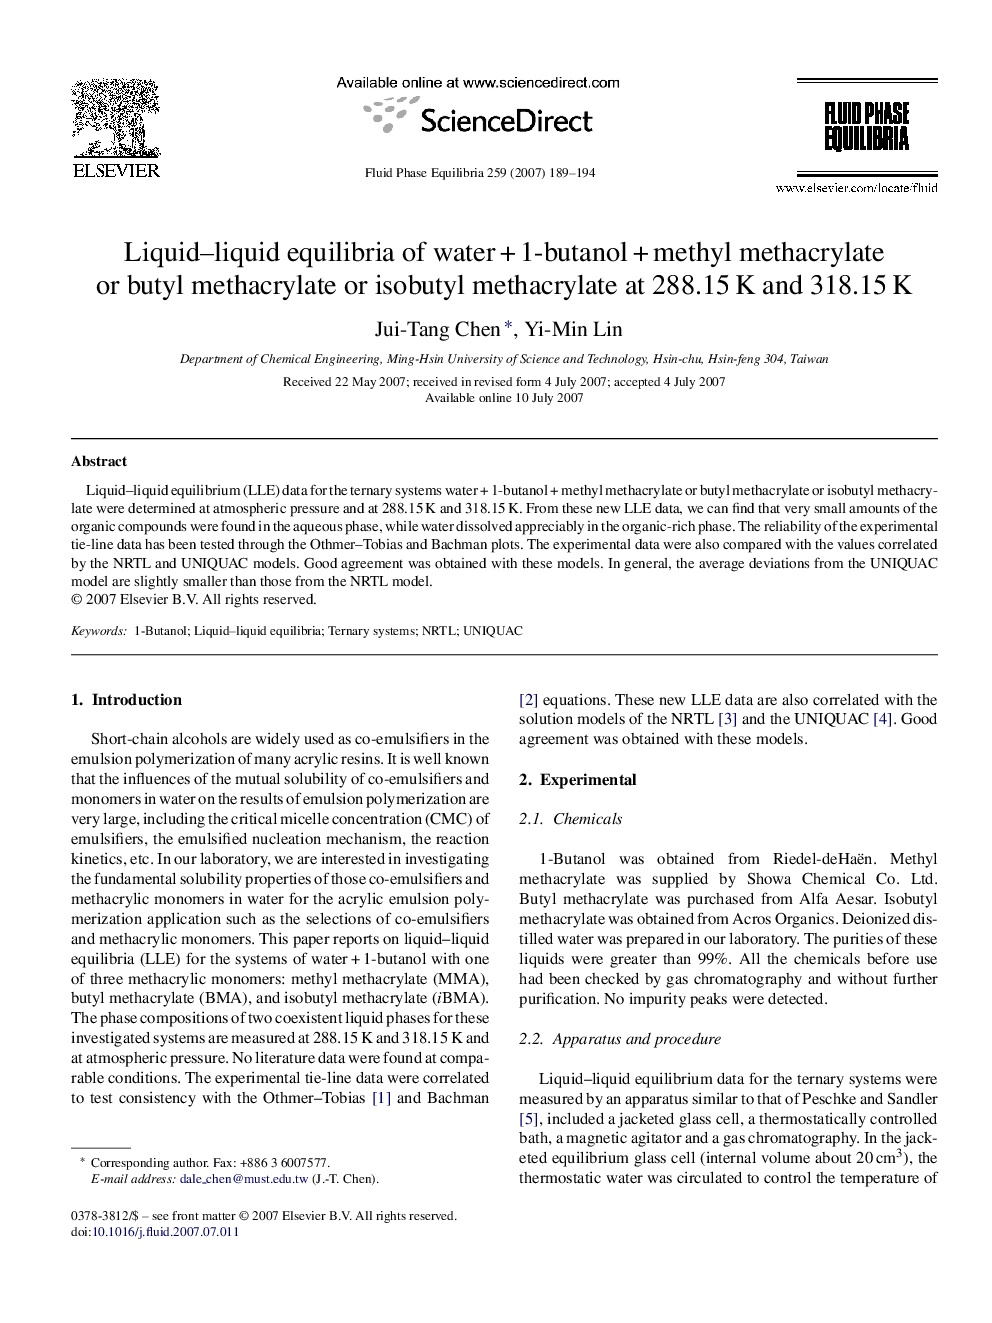 Liquid–liquid equilibria of water + 1-butanol + methyl methacrylate or butyl methacrylate or isobutyl methacrylate at 288.15 K and 318.15 K